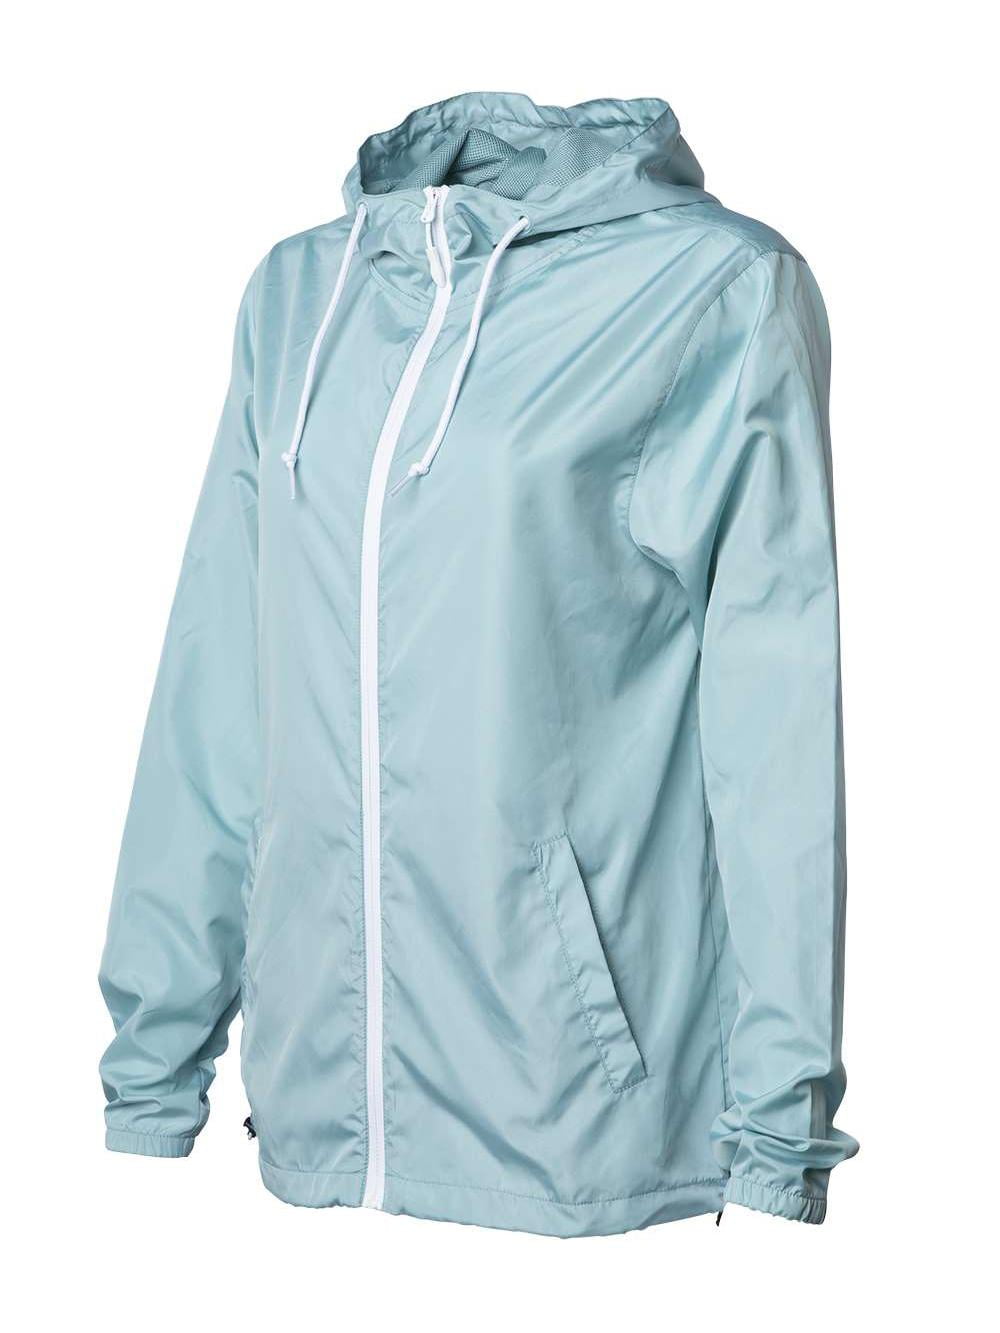 Girls Boys Windbreaker Turquoise Waterproof Raincoat Jacket Lightweight Age 5-13 